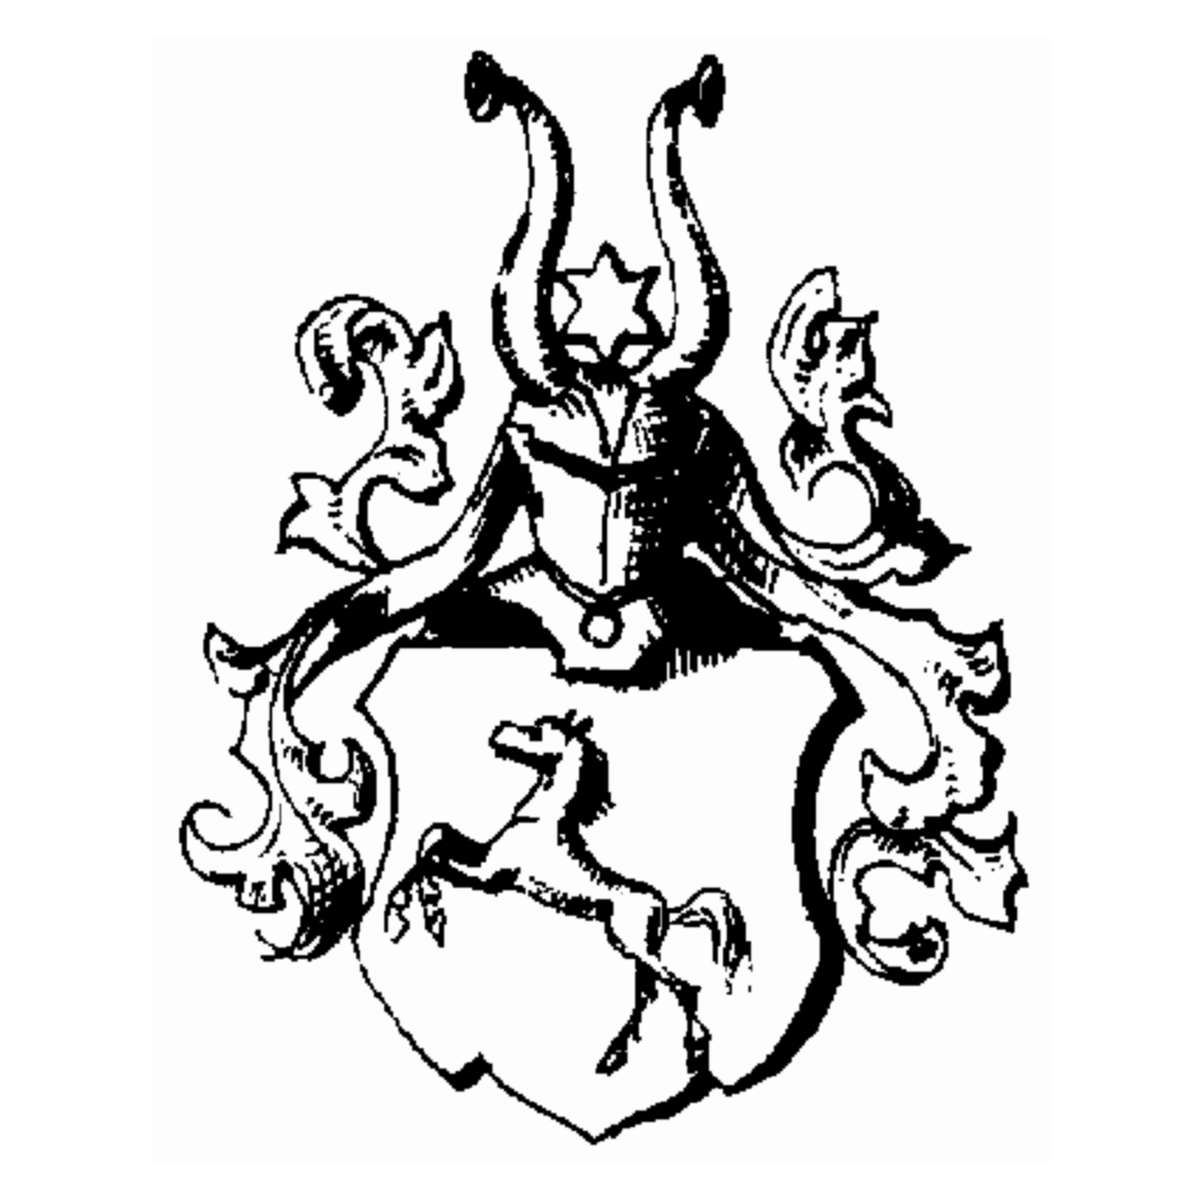 Wappen der Familie Rotzinger